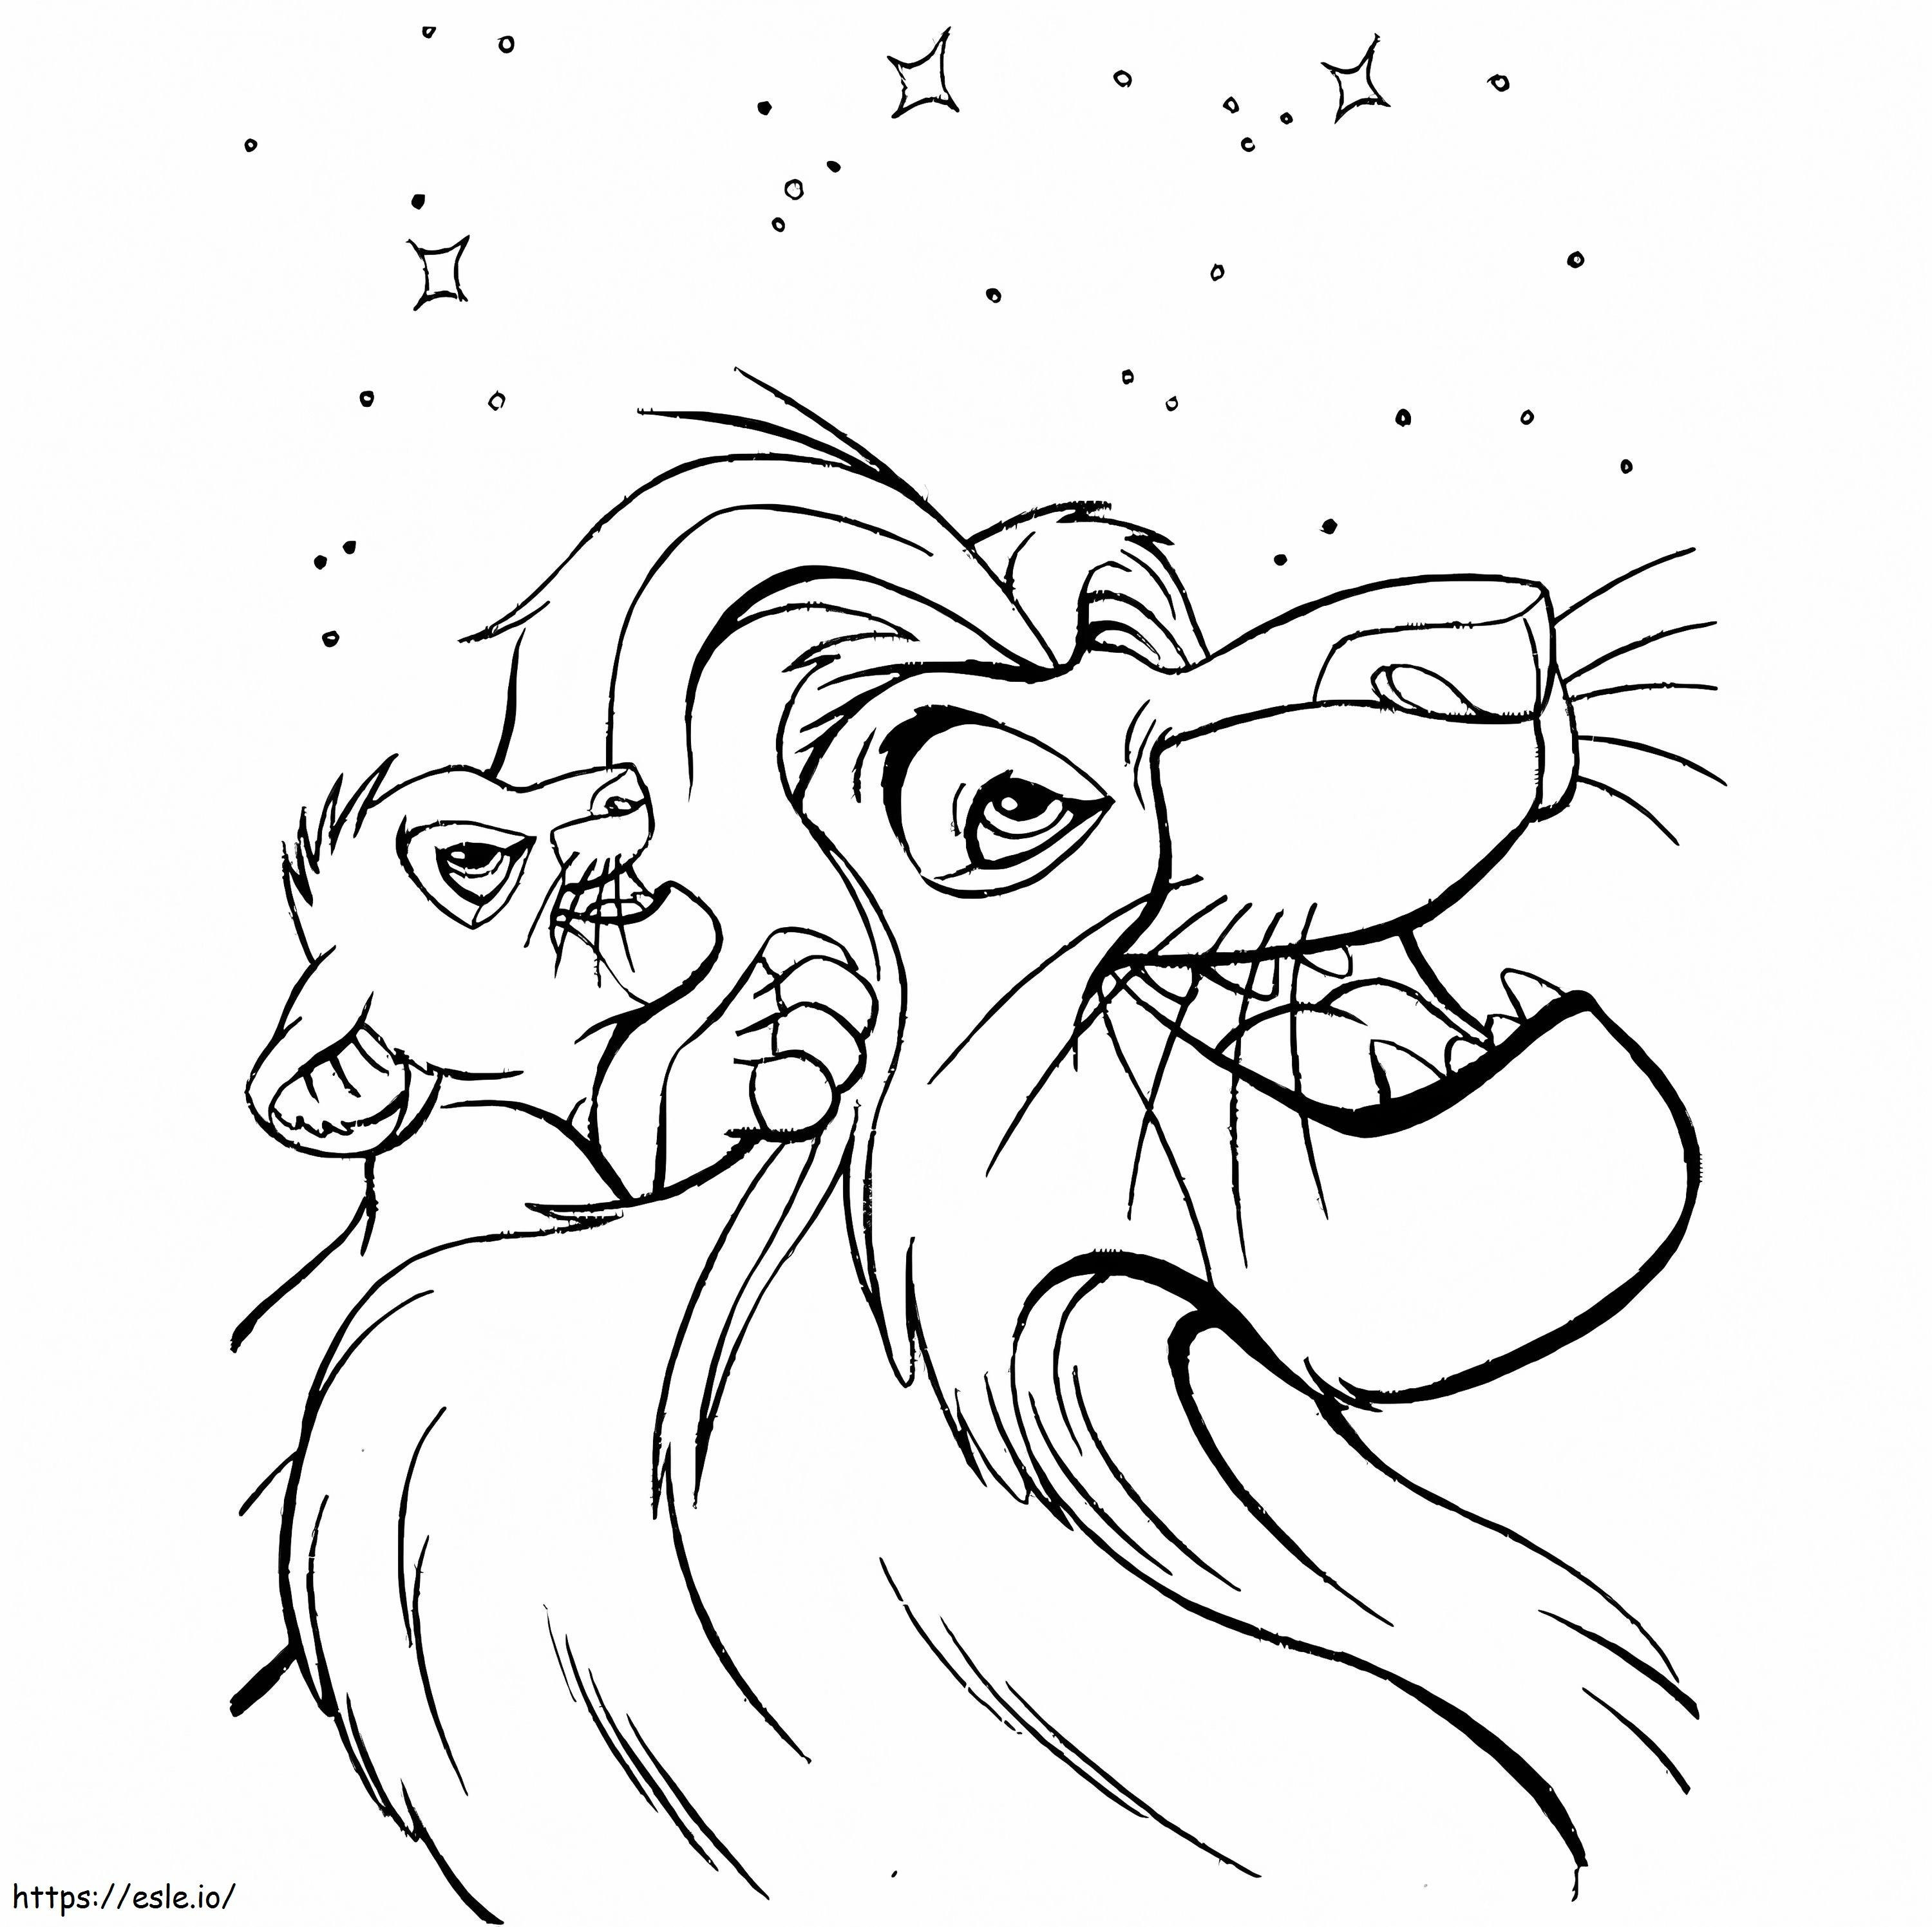 Mufasa And Simba Stargazing coloring page